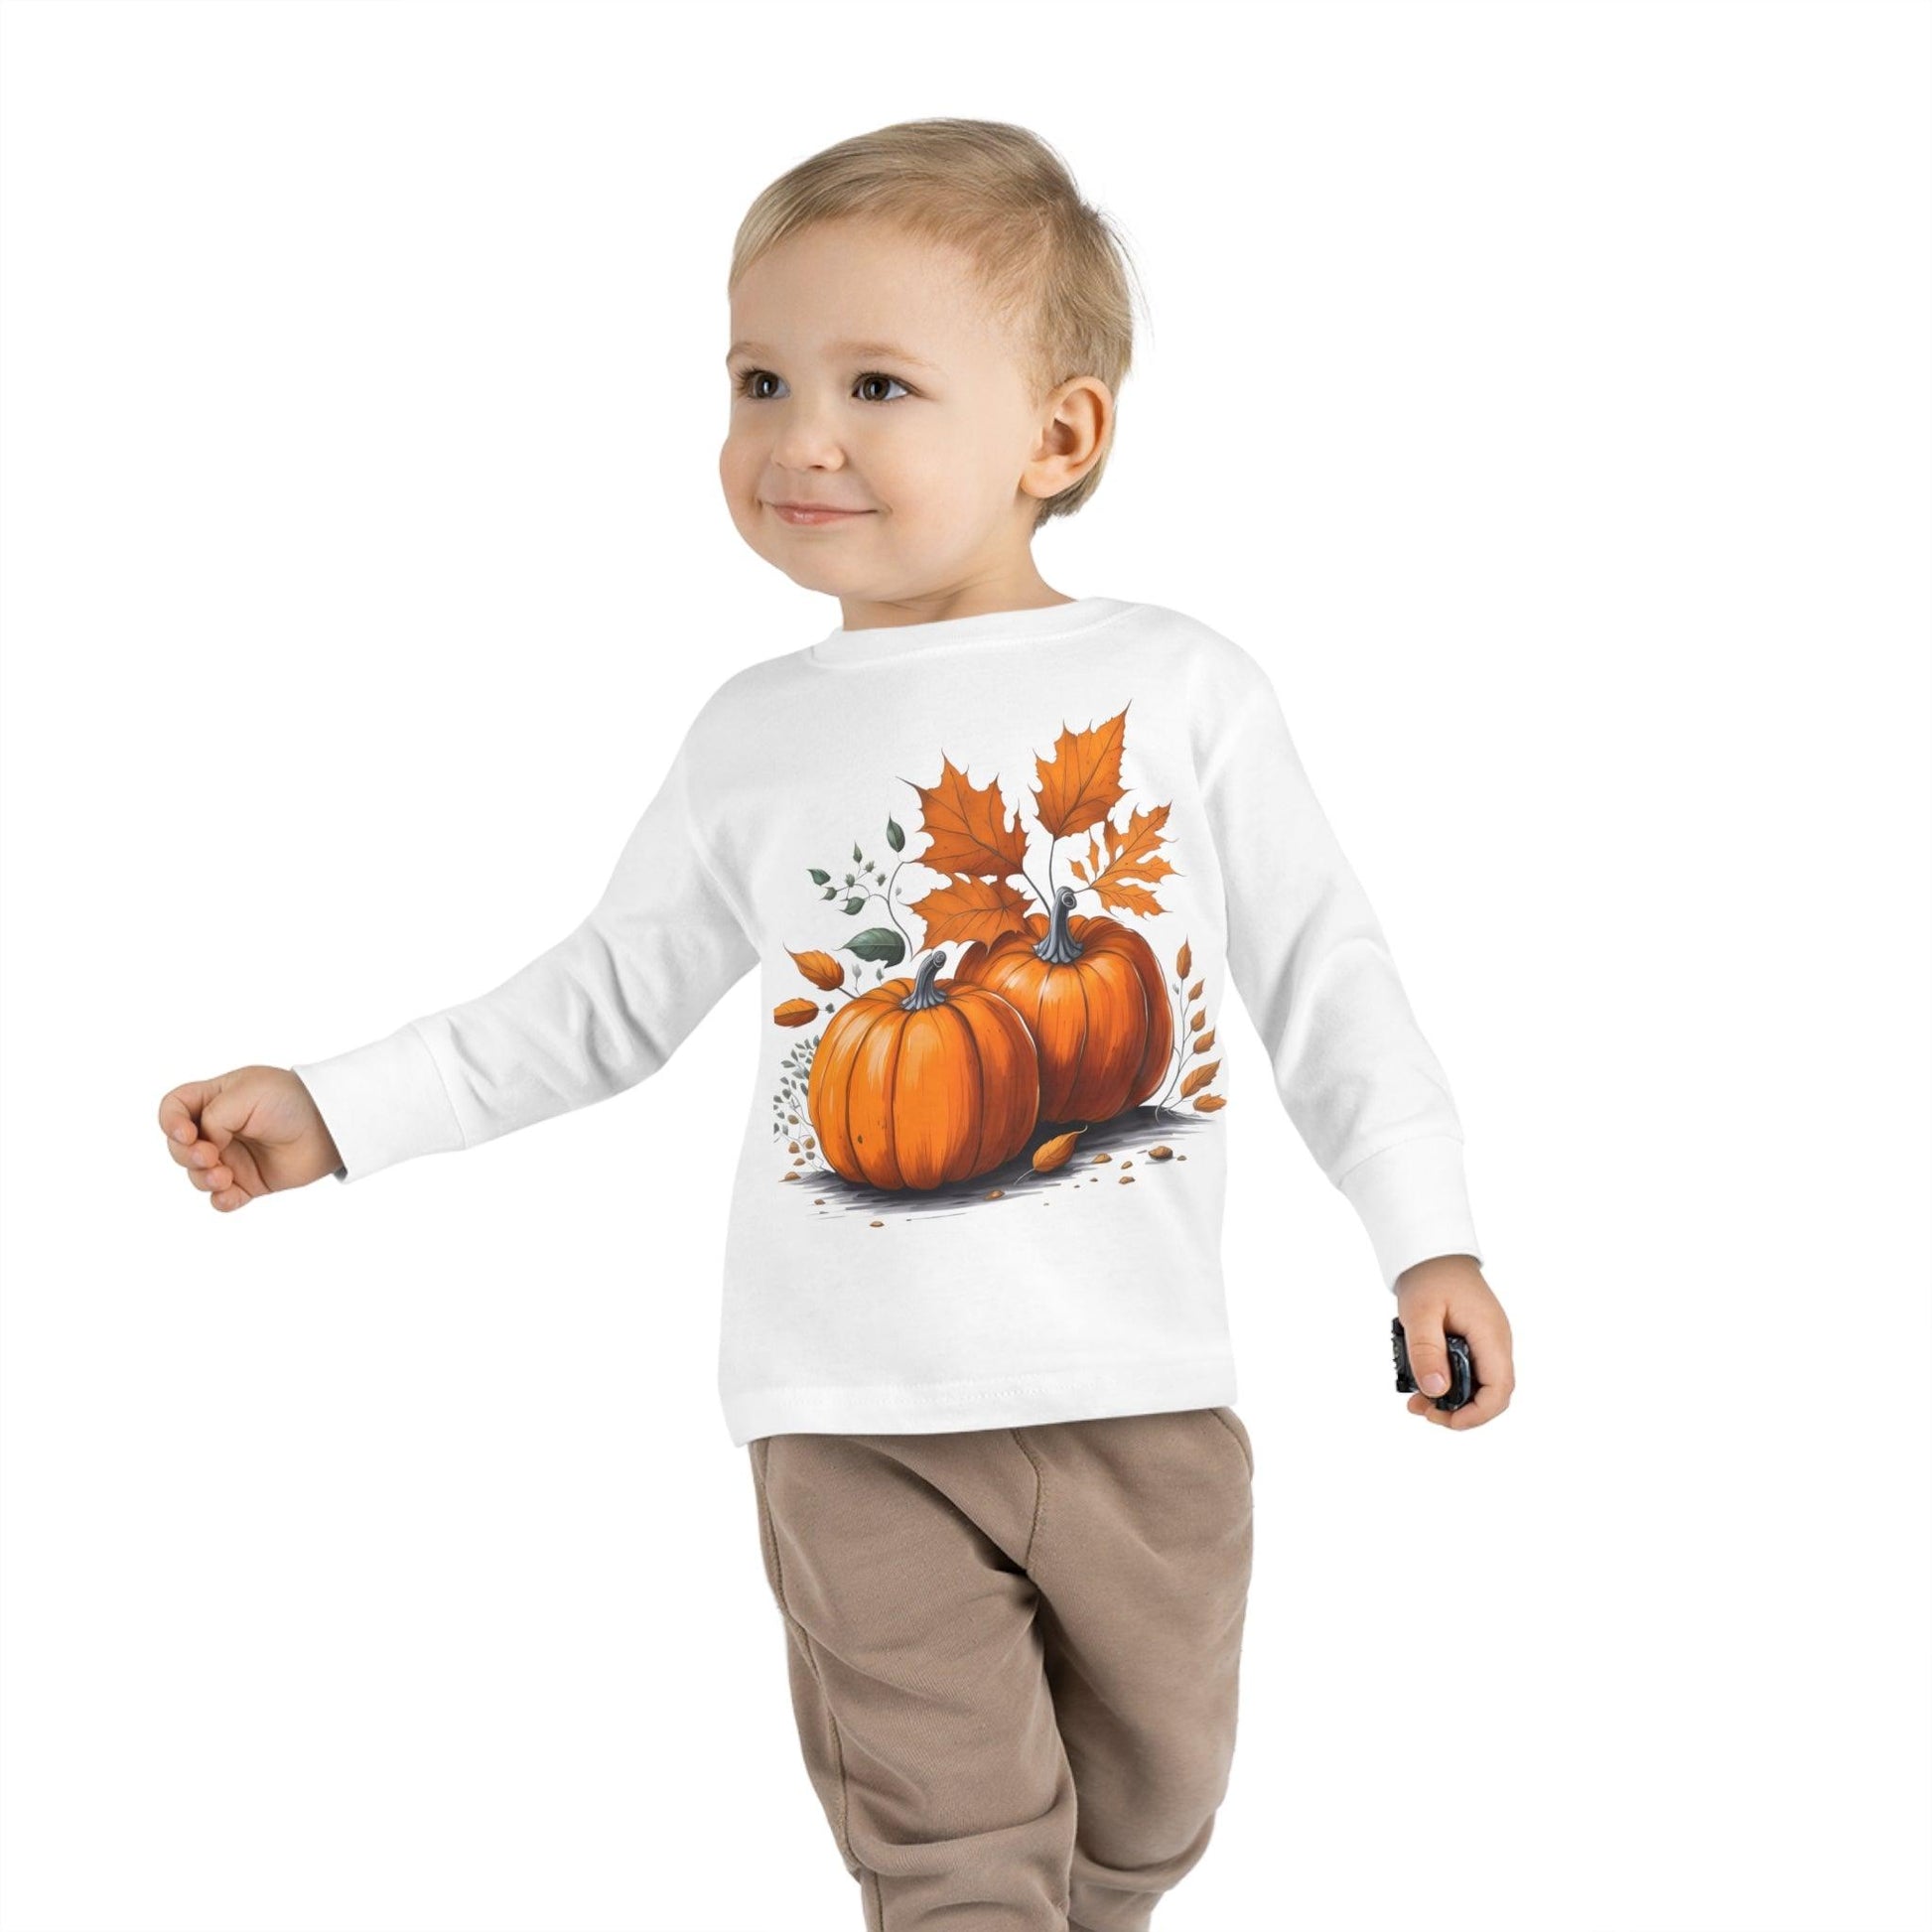 Kids Halloween Pumpkin Shirt Fall Shirt Kids Halloween Costume Kids Trick or Treat Outfit for Halloween - Giftsmojo